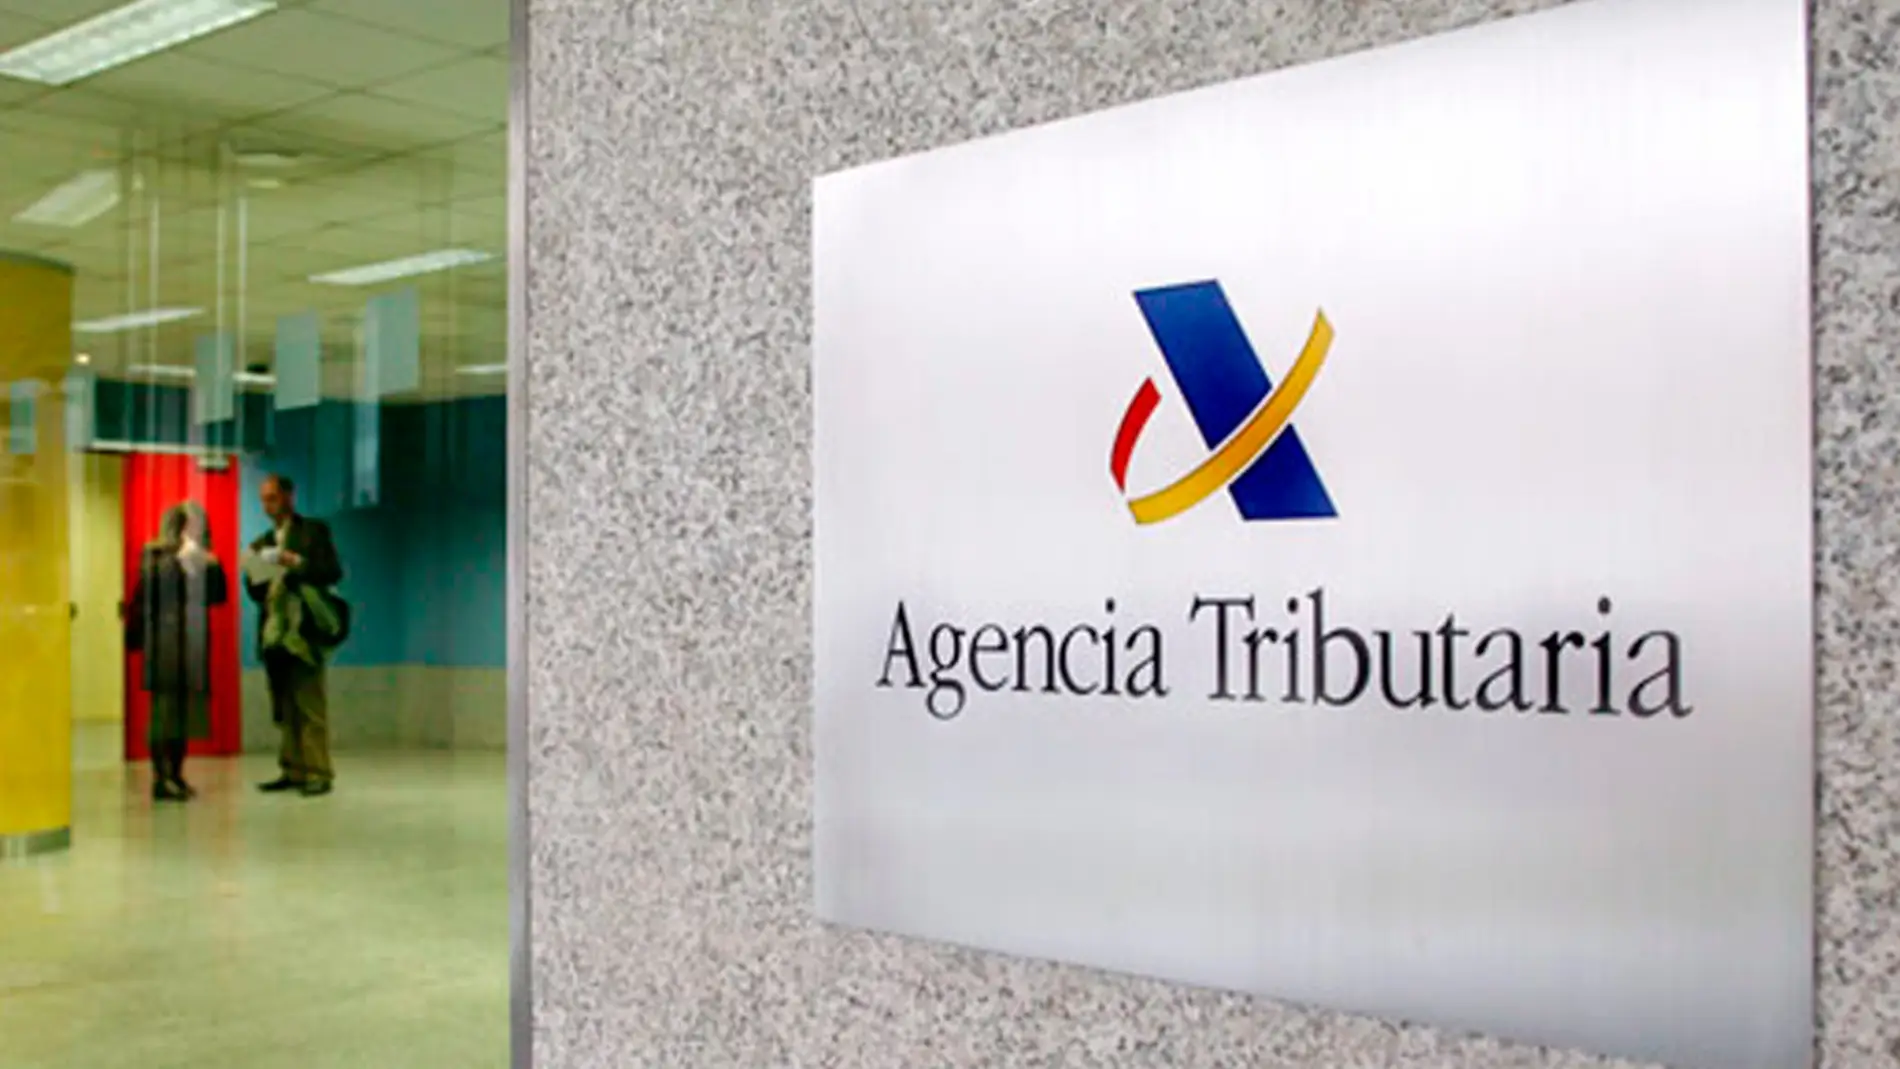 Agencia Tributaria Espana